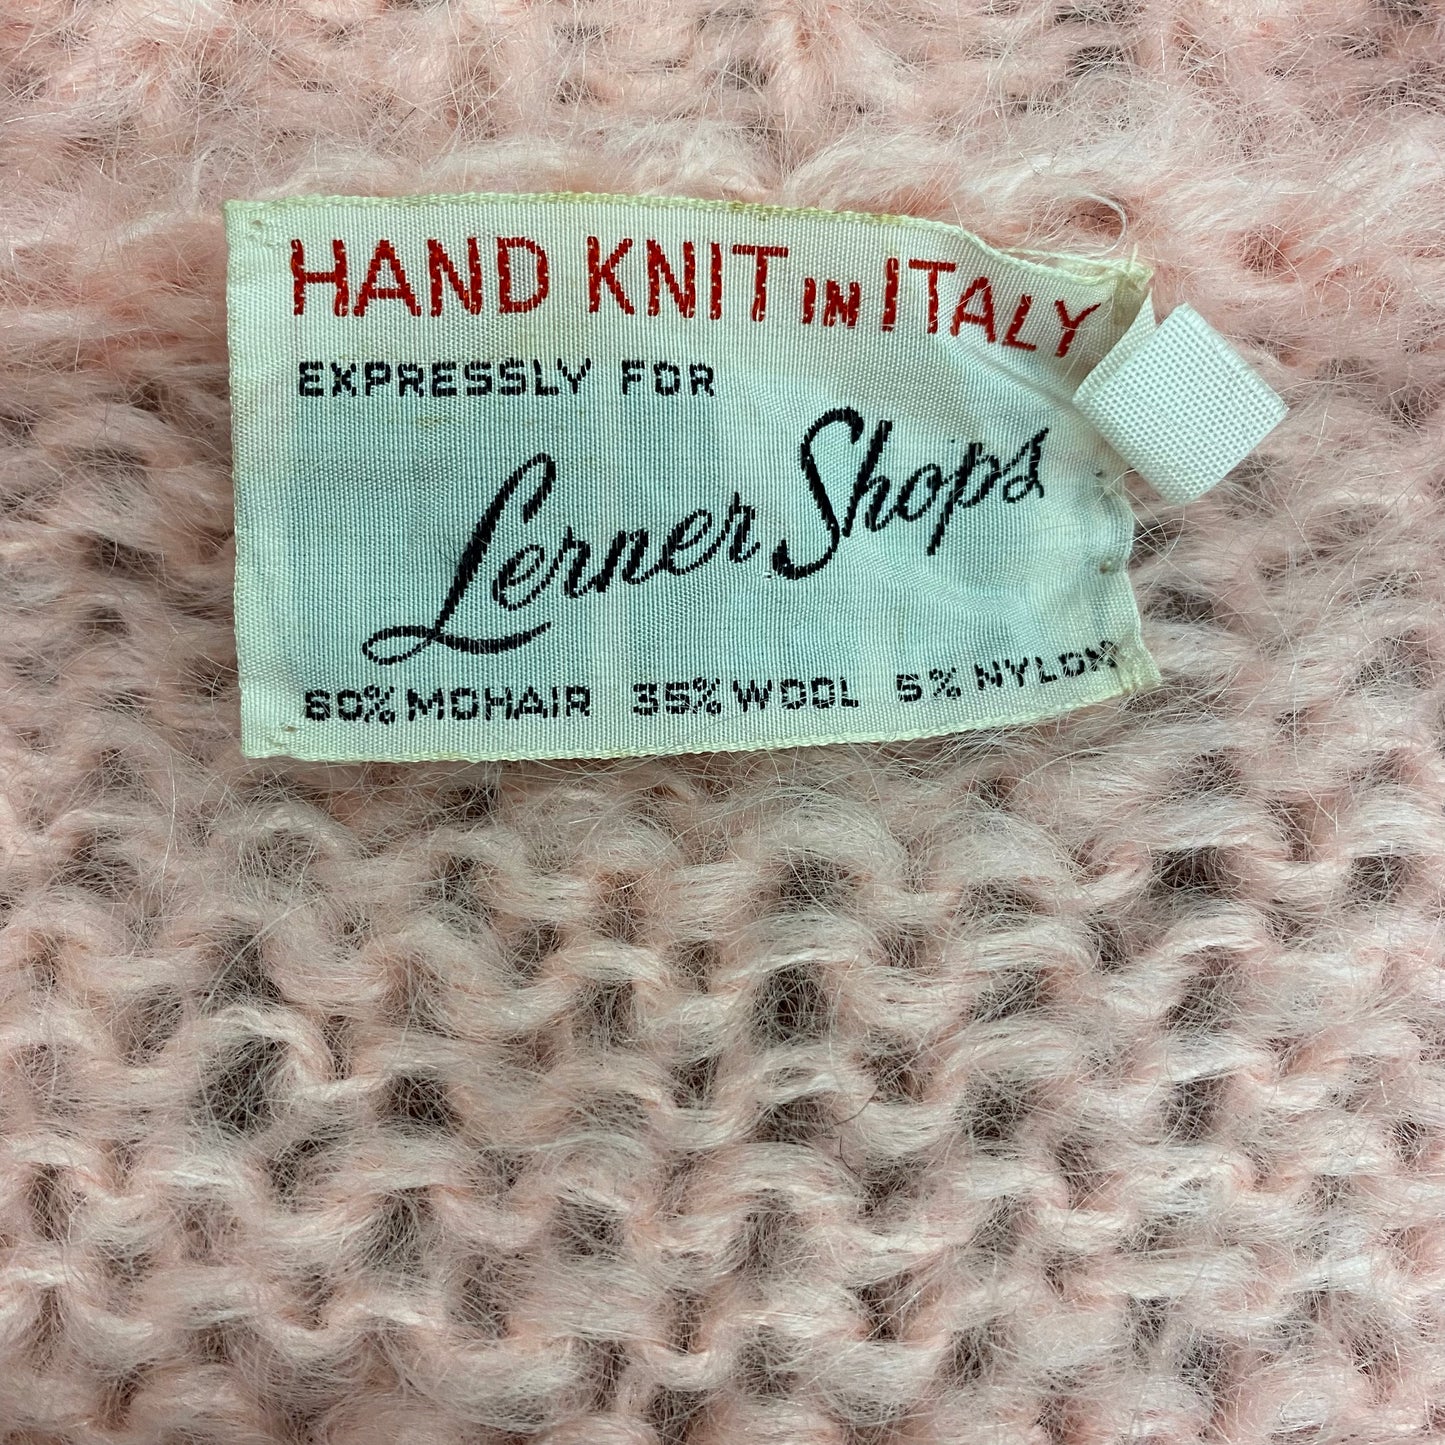 1970s Pink Mohair Blend Italian Hand Knit Sweater - Size Medium